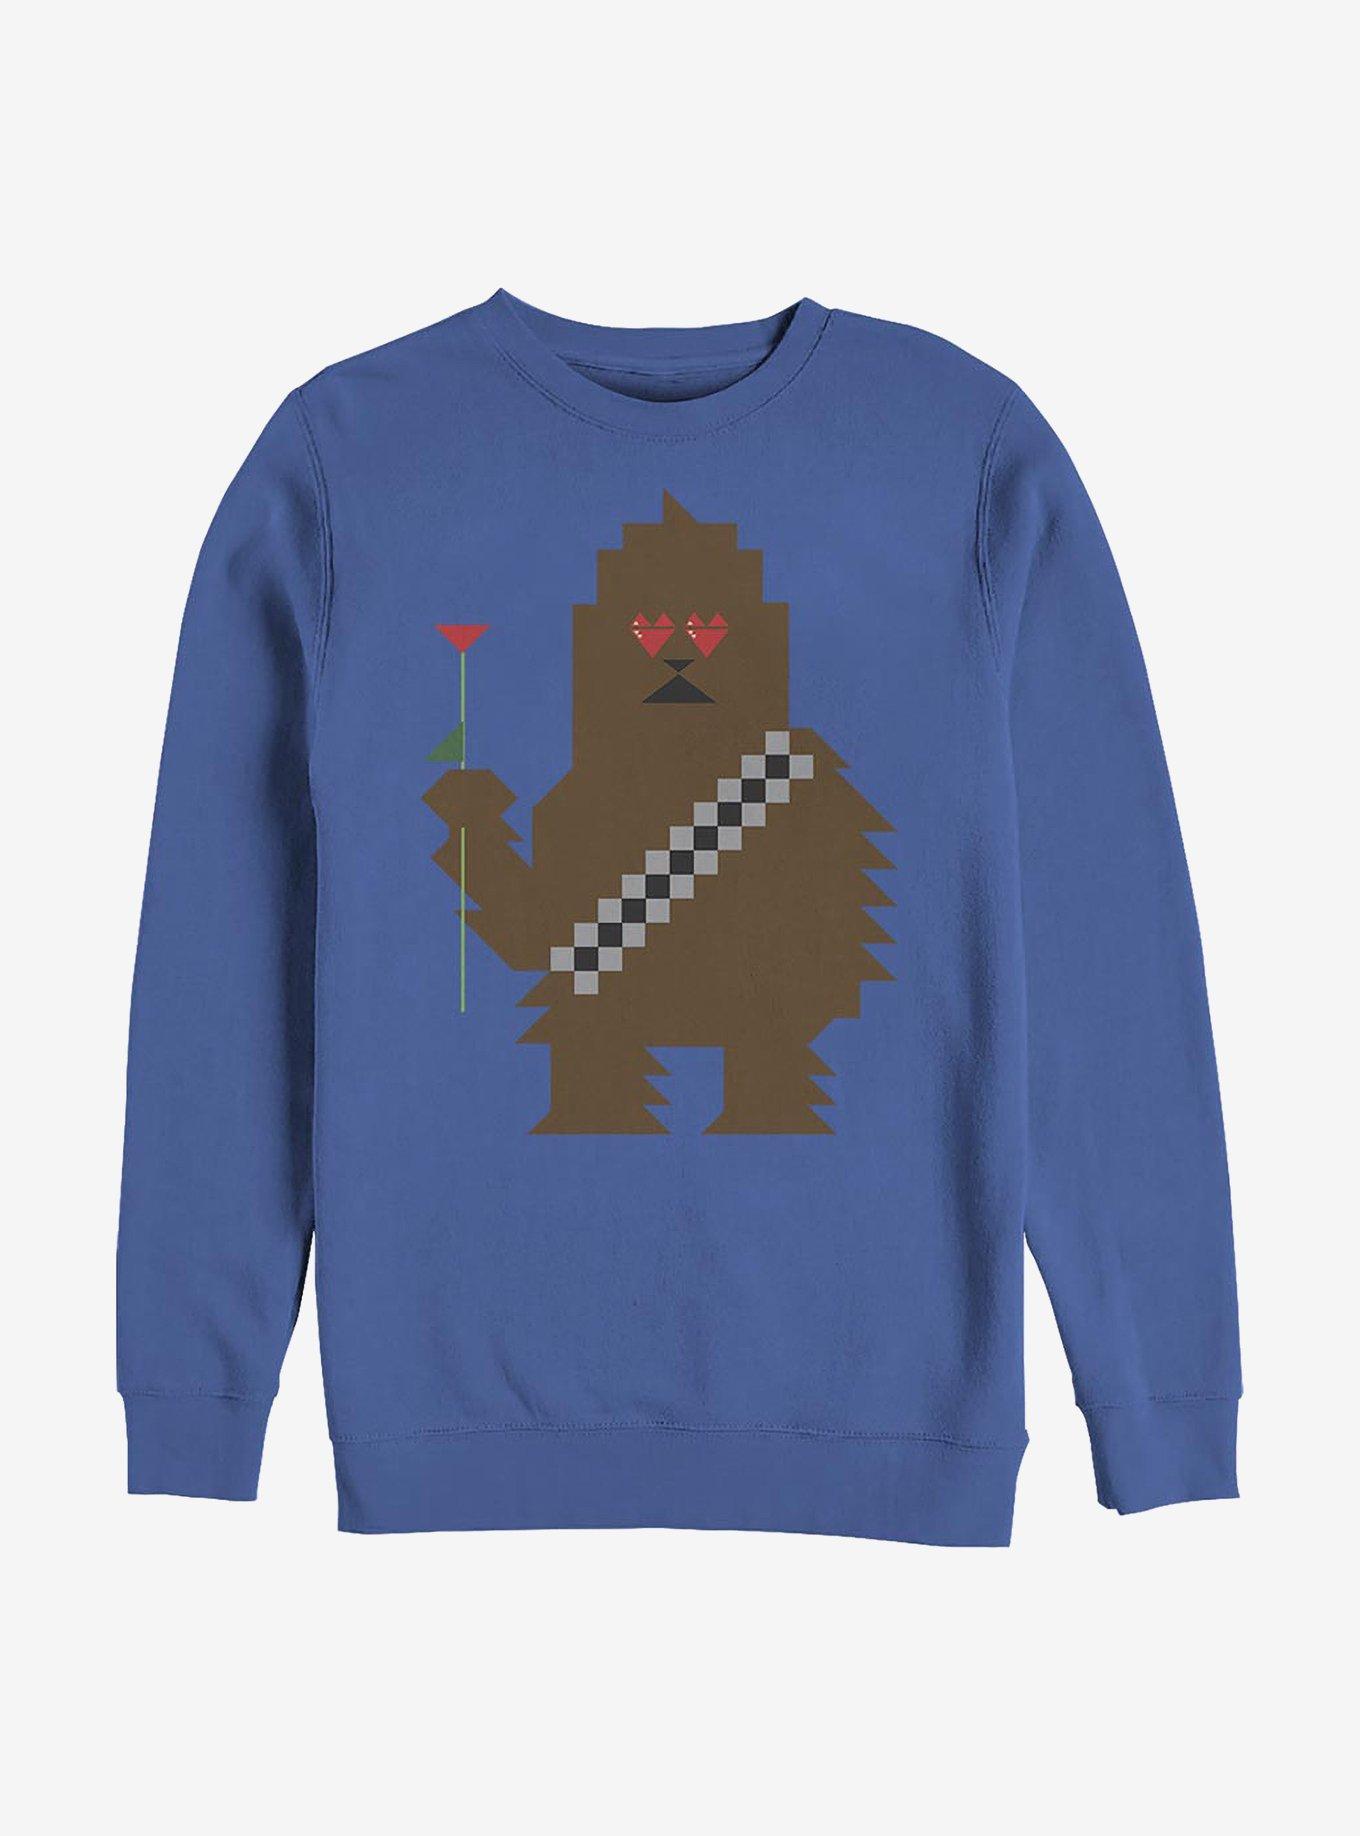 Star Wars Wookie Love Crew Sweatshirt